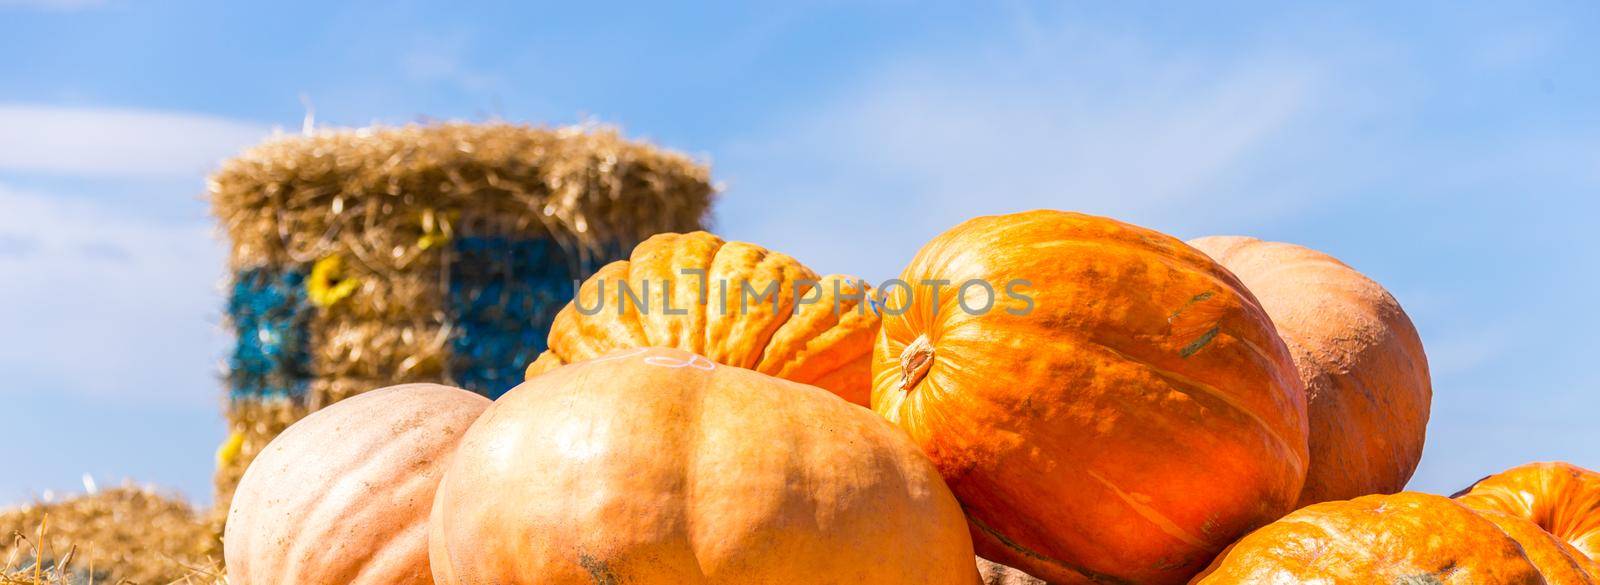 orange pumpkins at outdoor farmer market